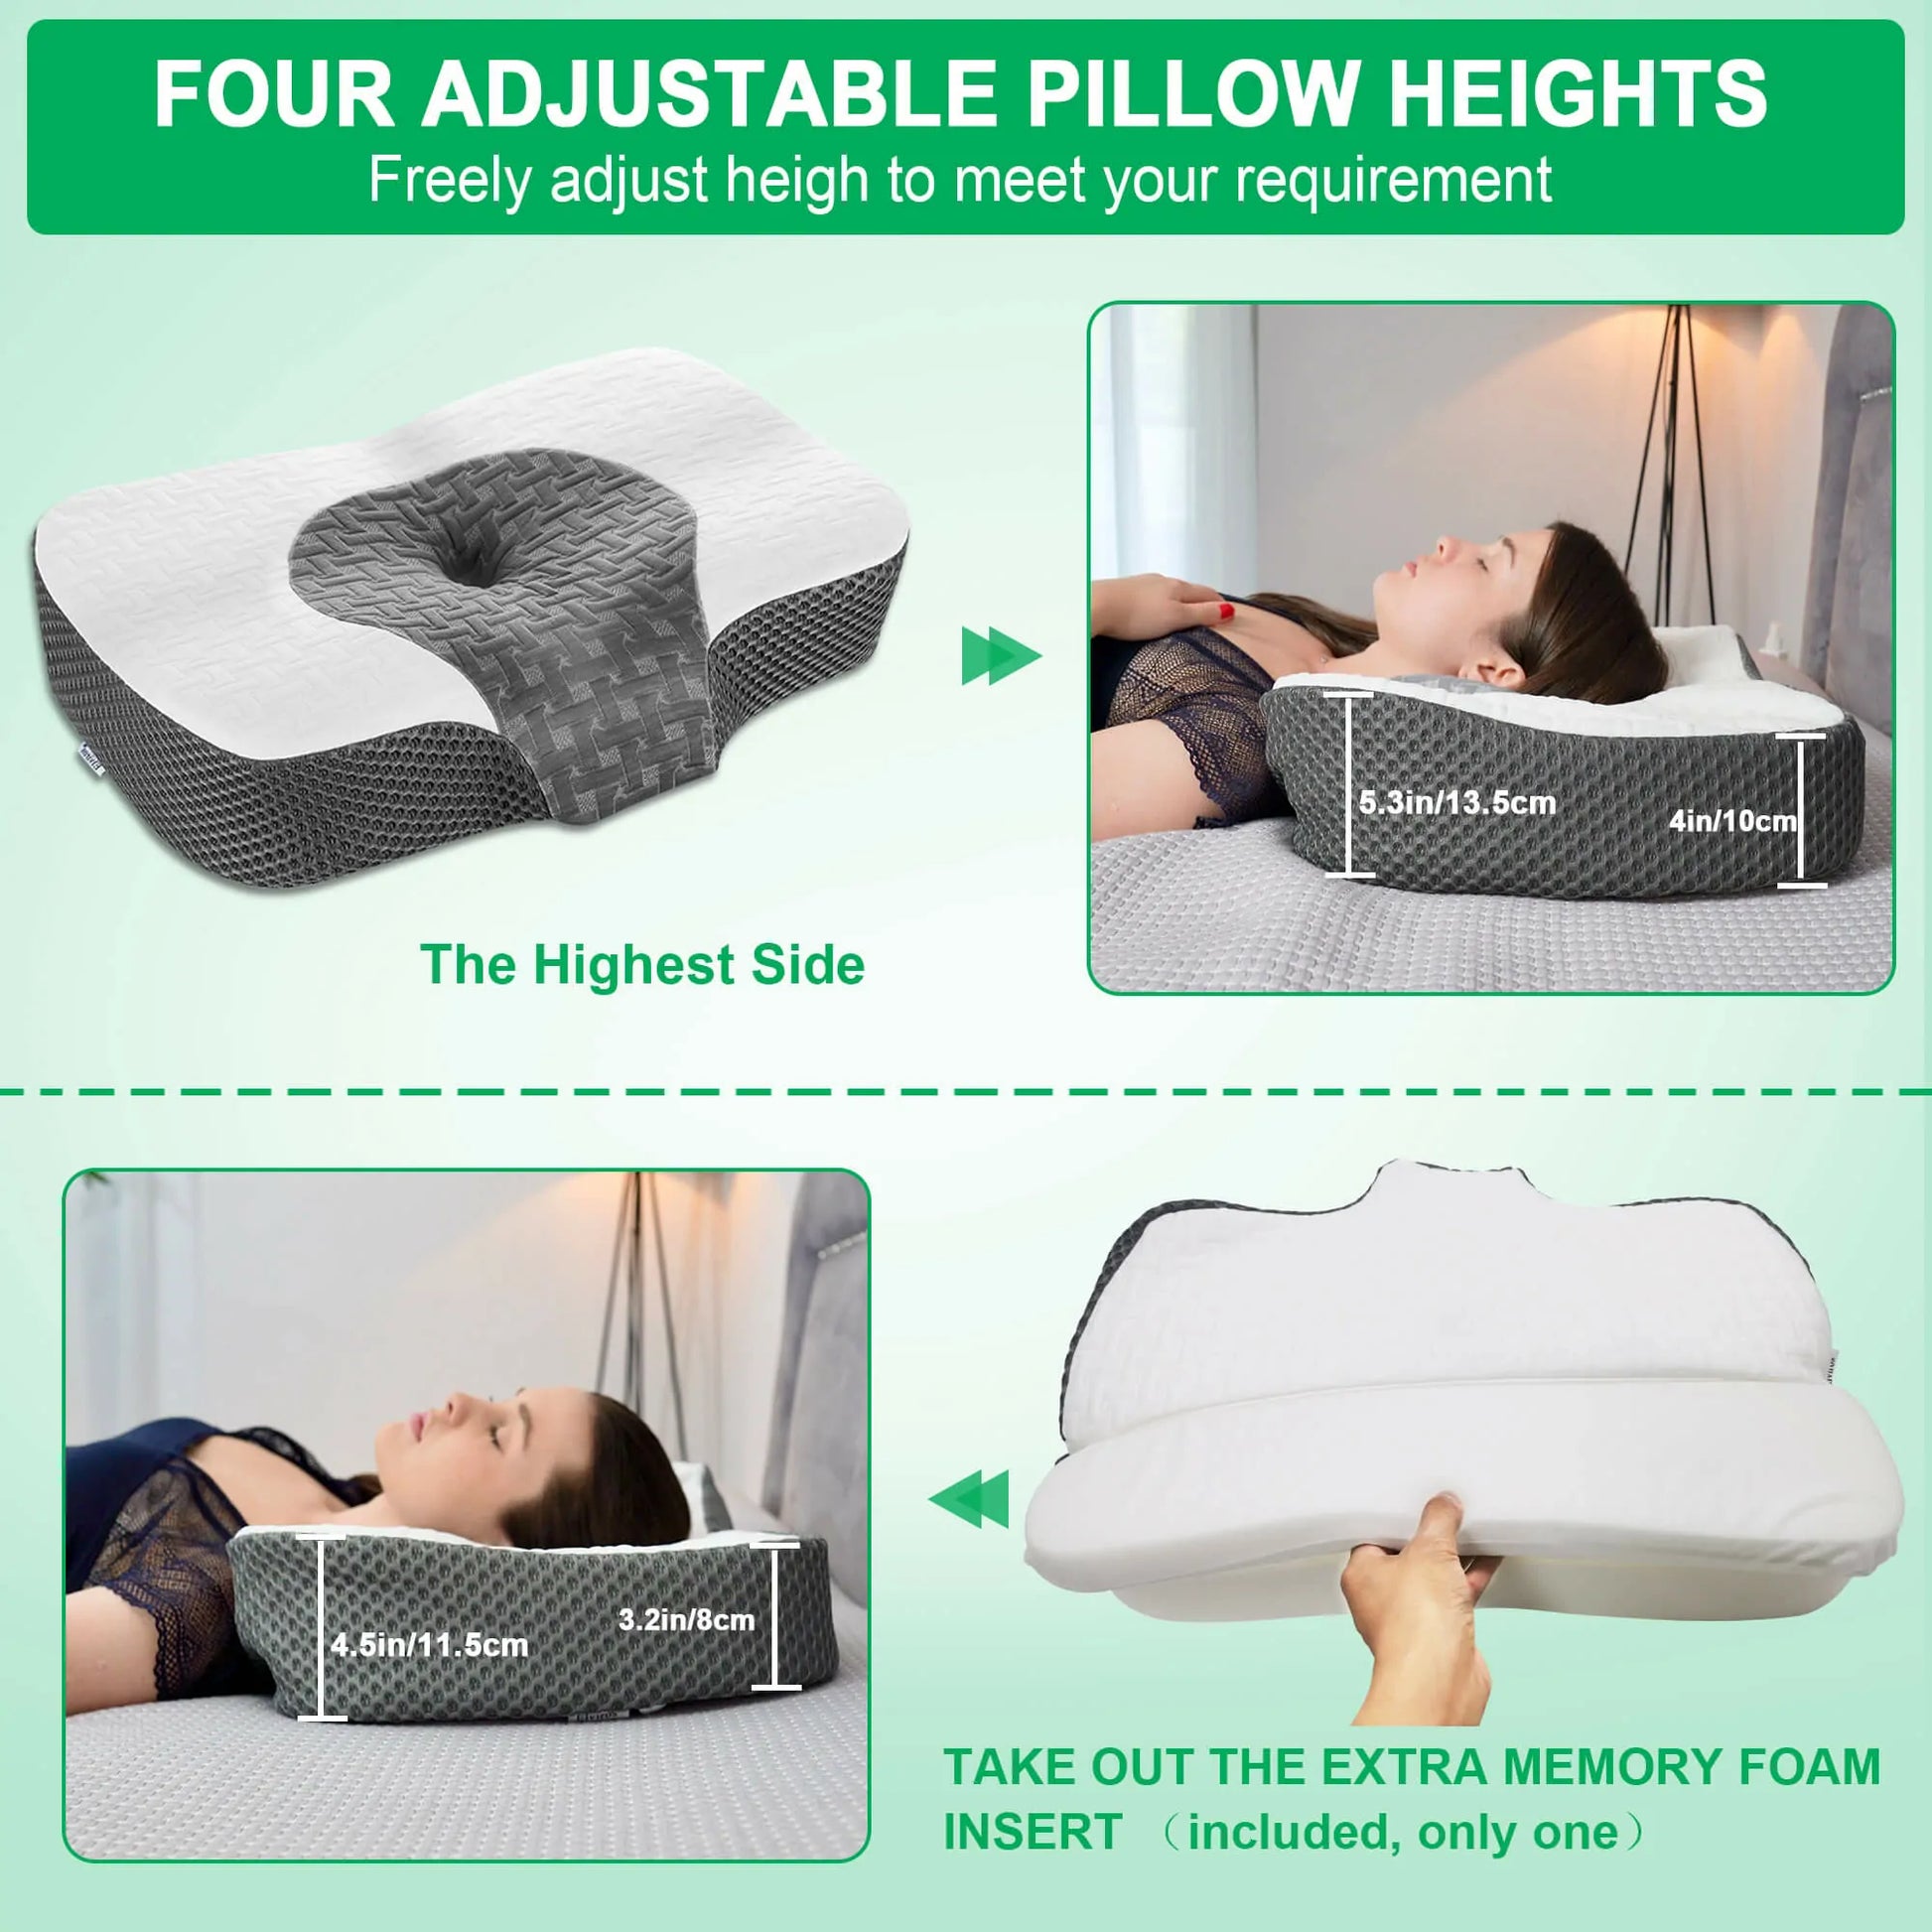 Elviros Contour Orthopedic Pillows